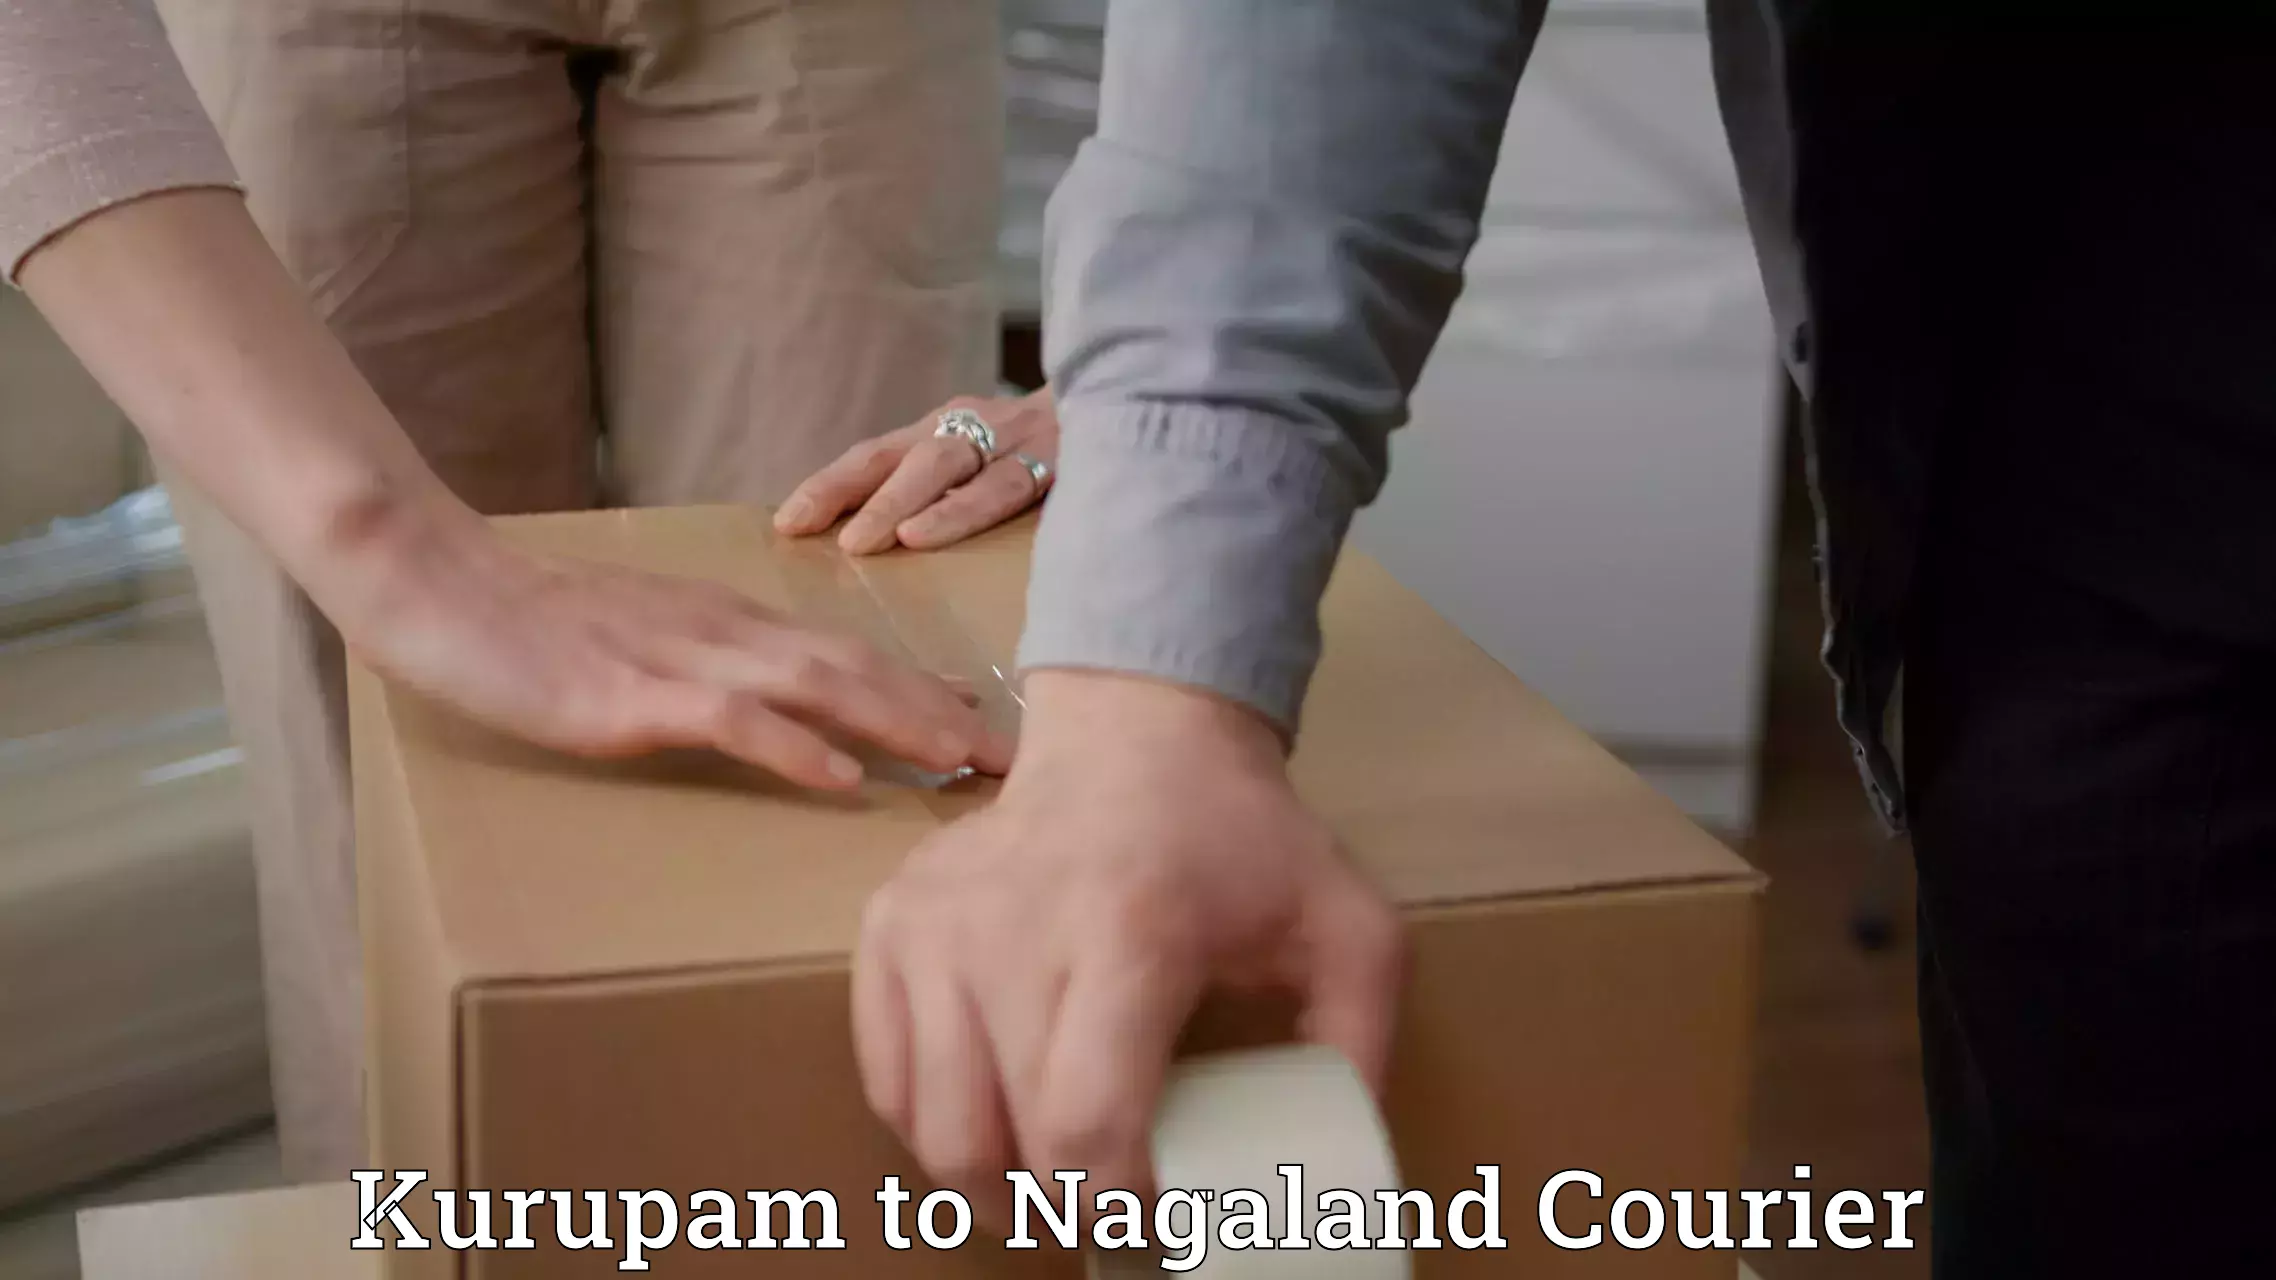 Global shipping networks Kurupam to Nagaland